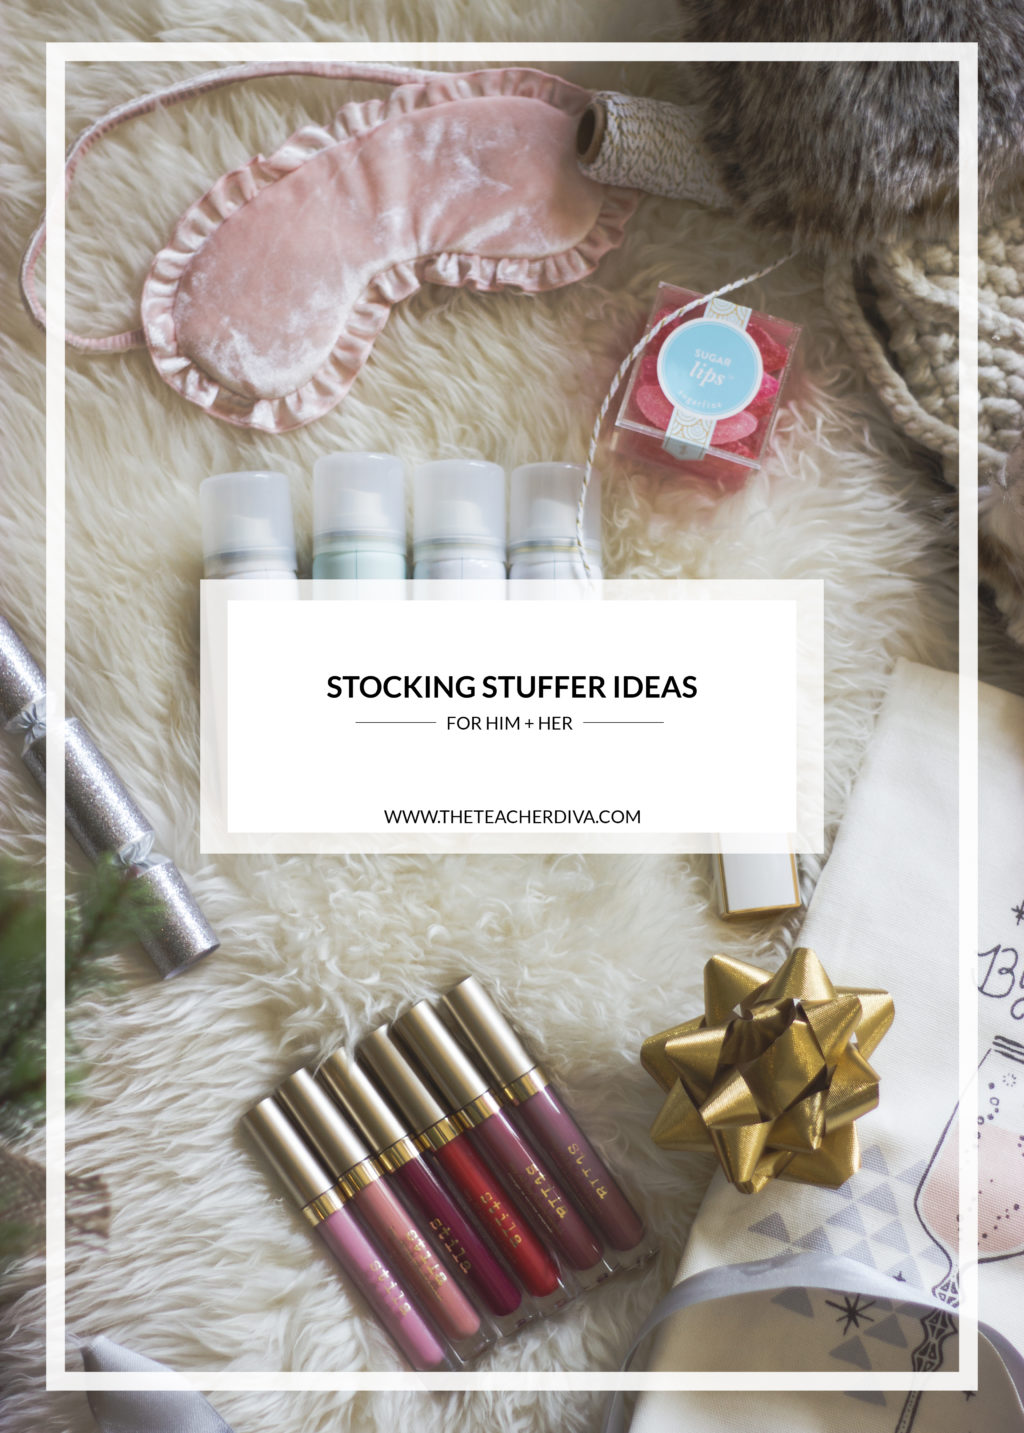 stocking-stuffer-ideas